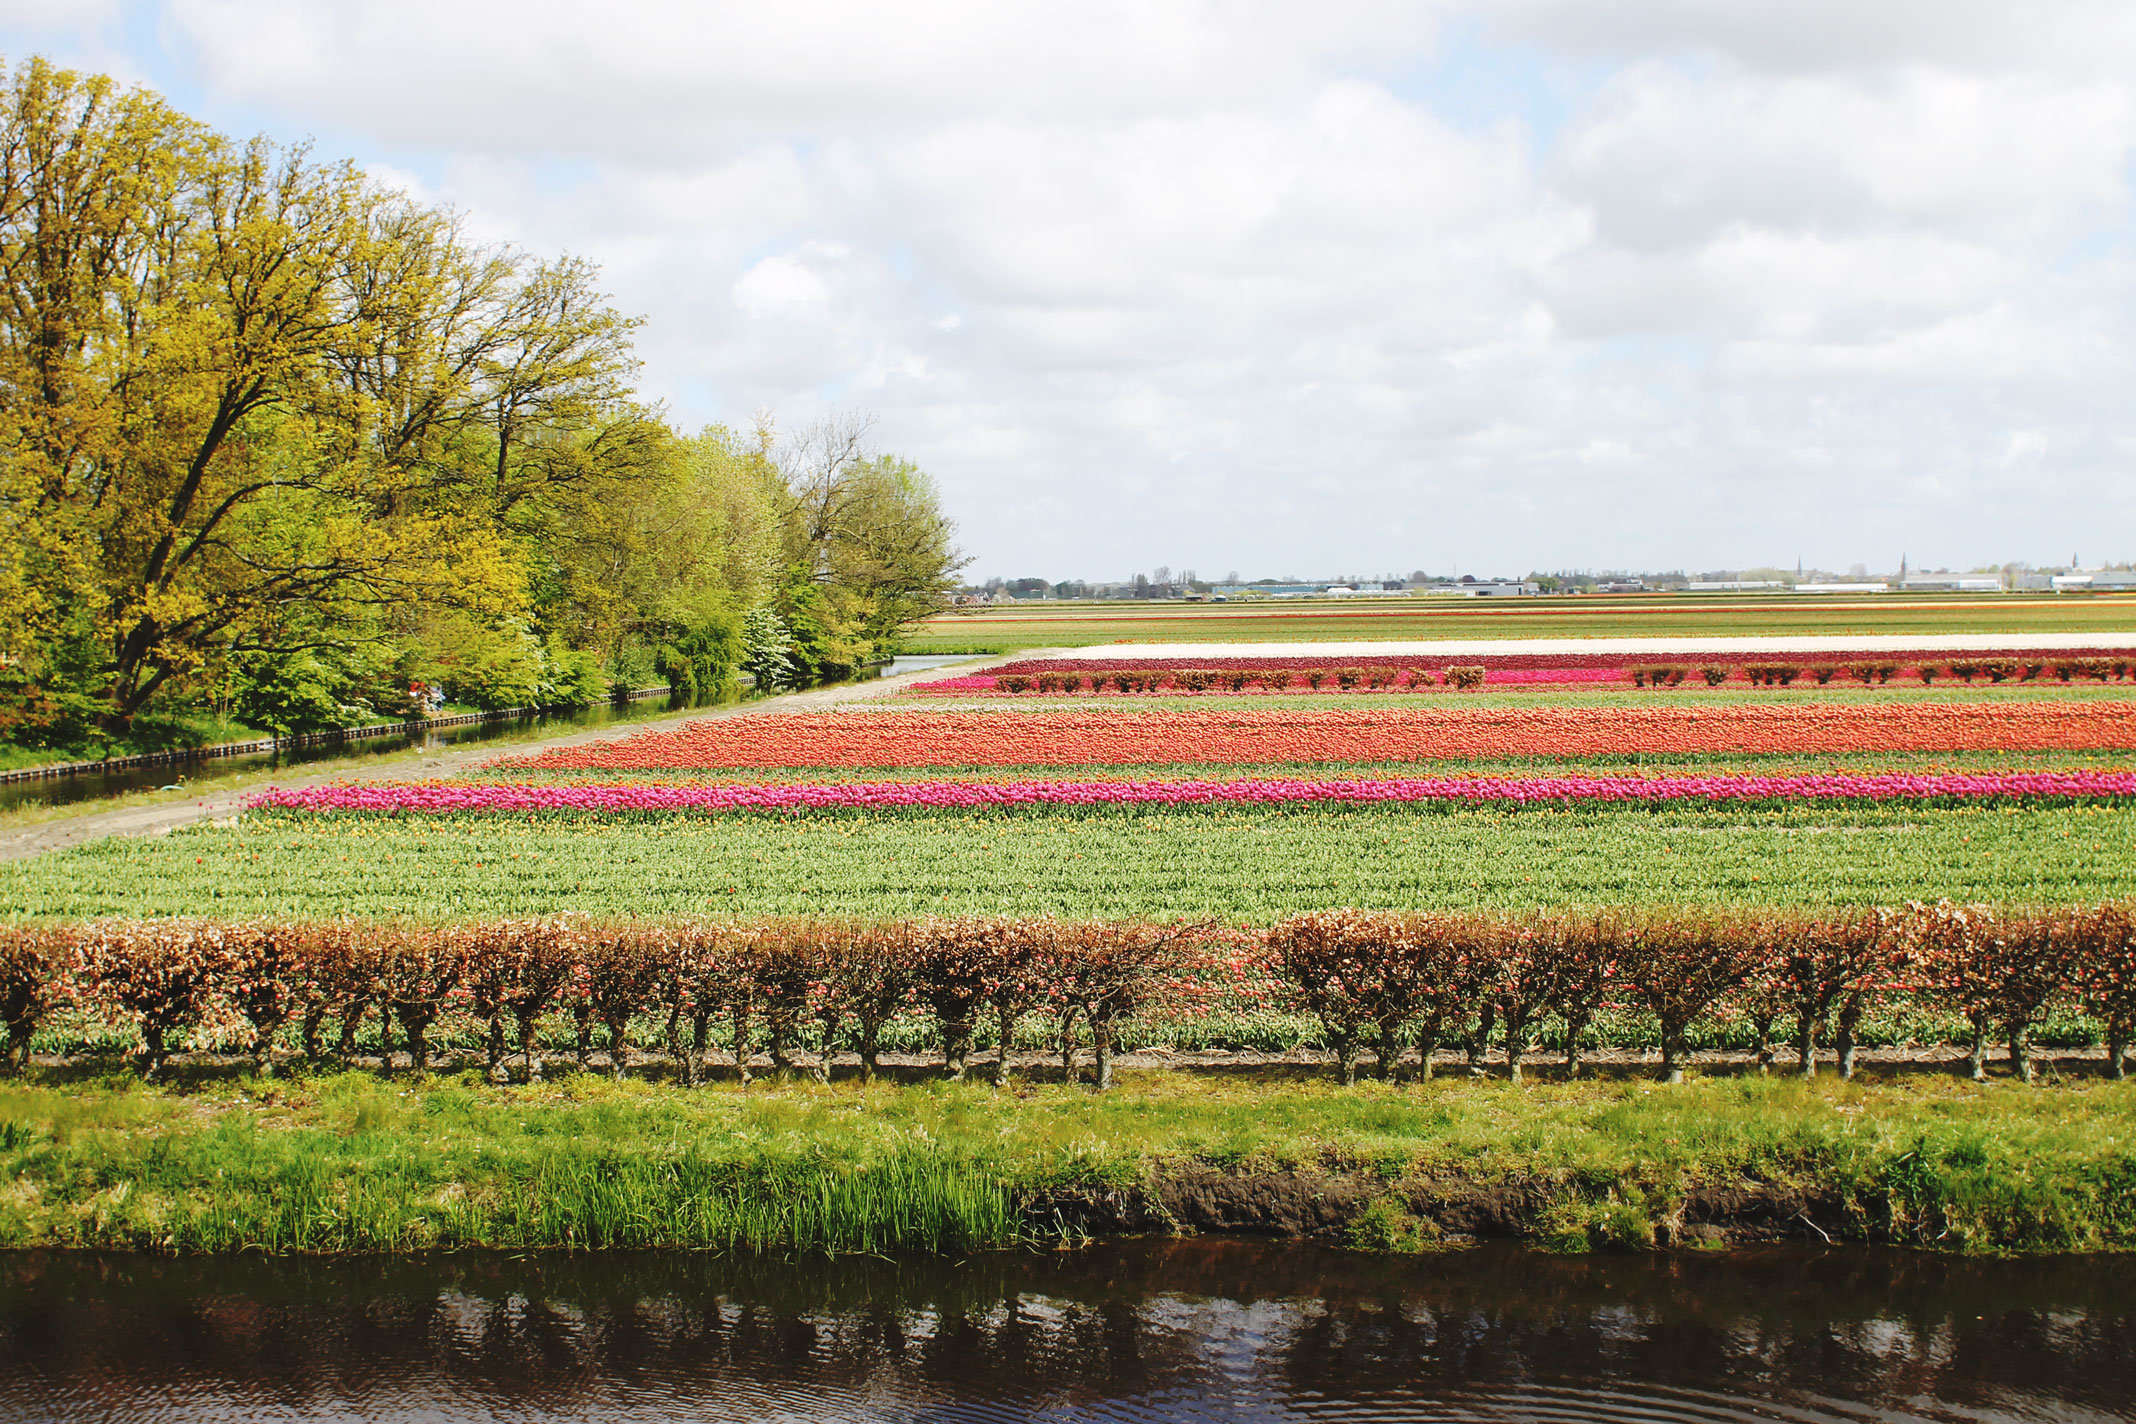 STYLEAT30 Travel + Fashion Blog - Keukenhof Gardens and Tulip Fields Tour from Amsterdam - Holland Tulips - 08